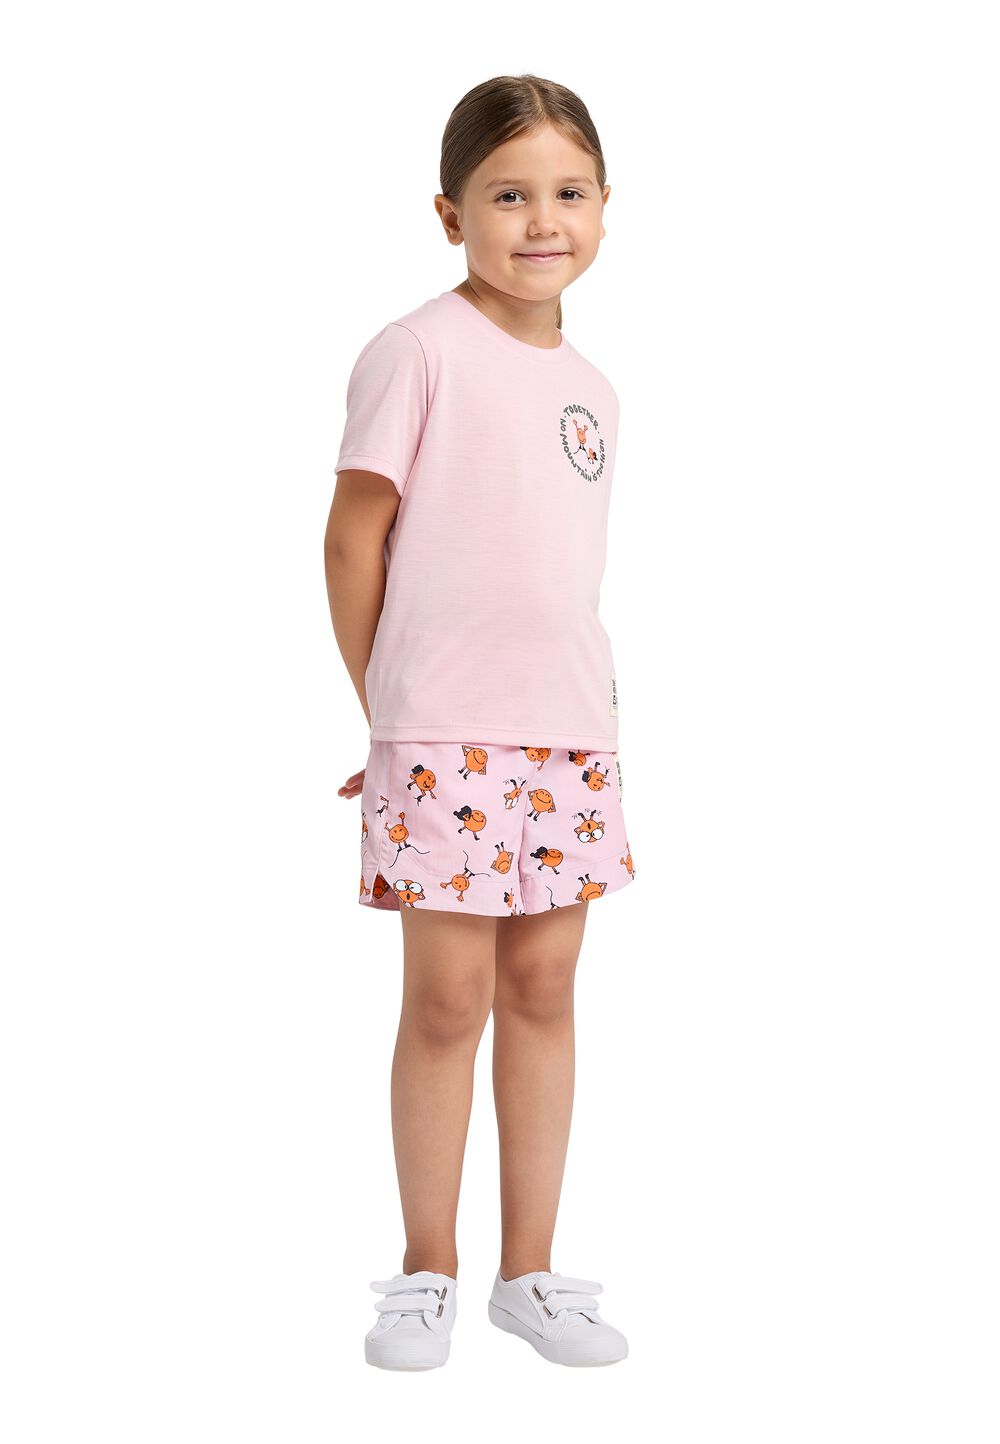 Jack Wolfskin Smileyworld Together T-Shirt Kids Functioneel shirt Kinderen 92 water lily water lily